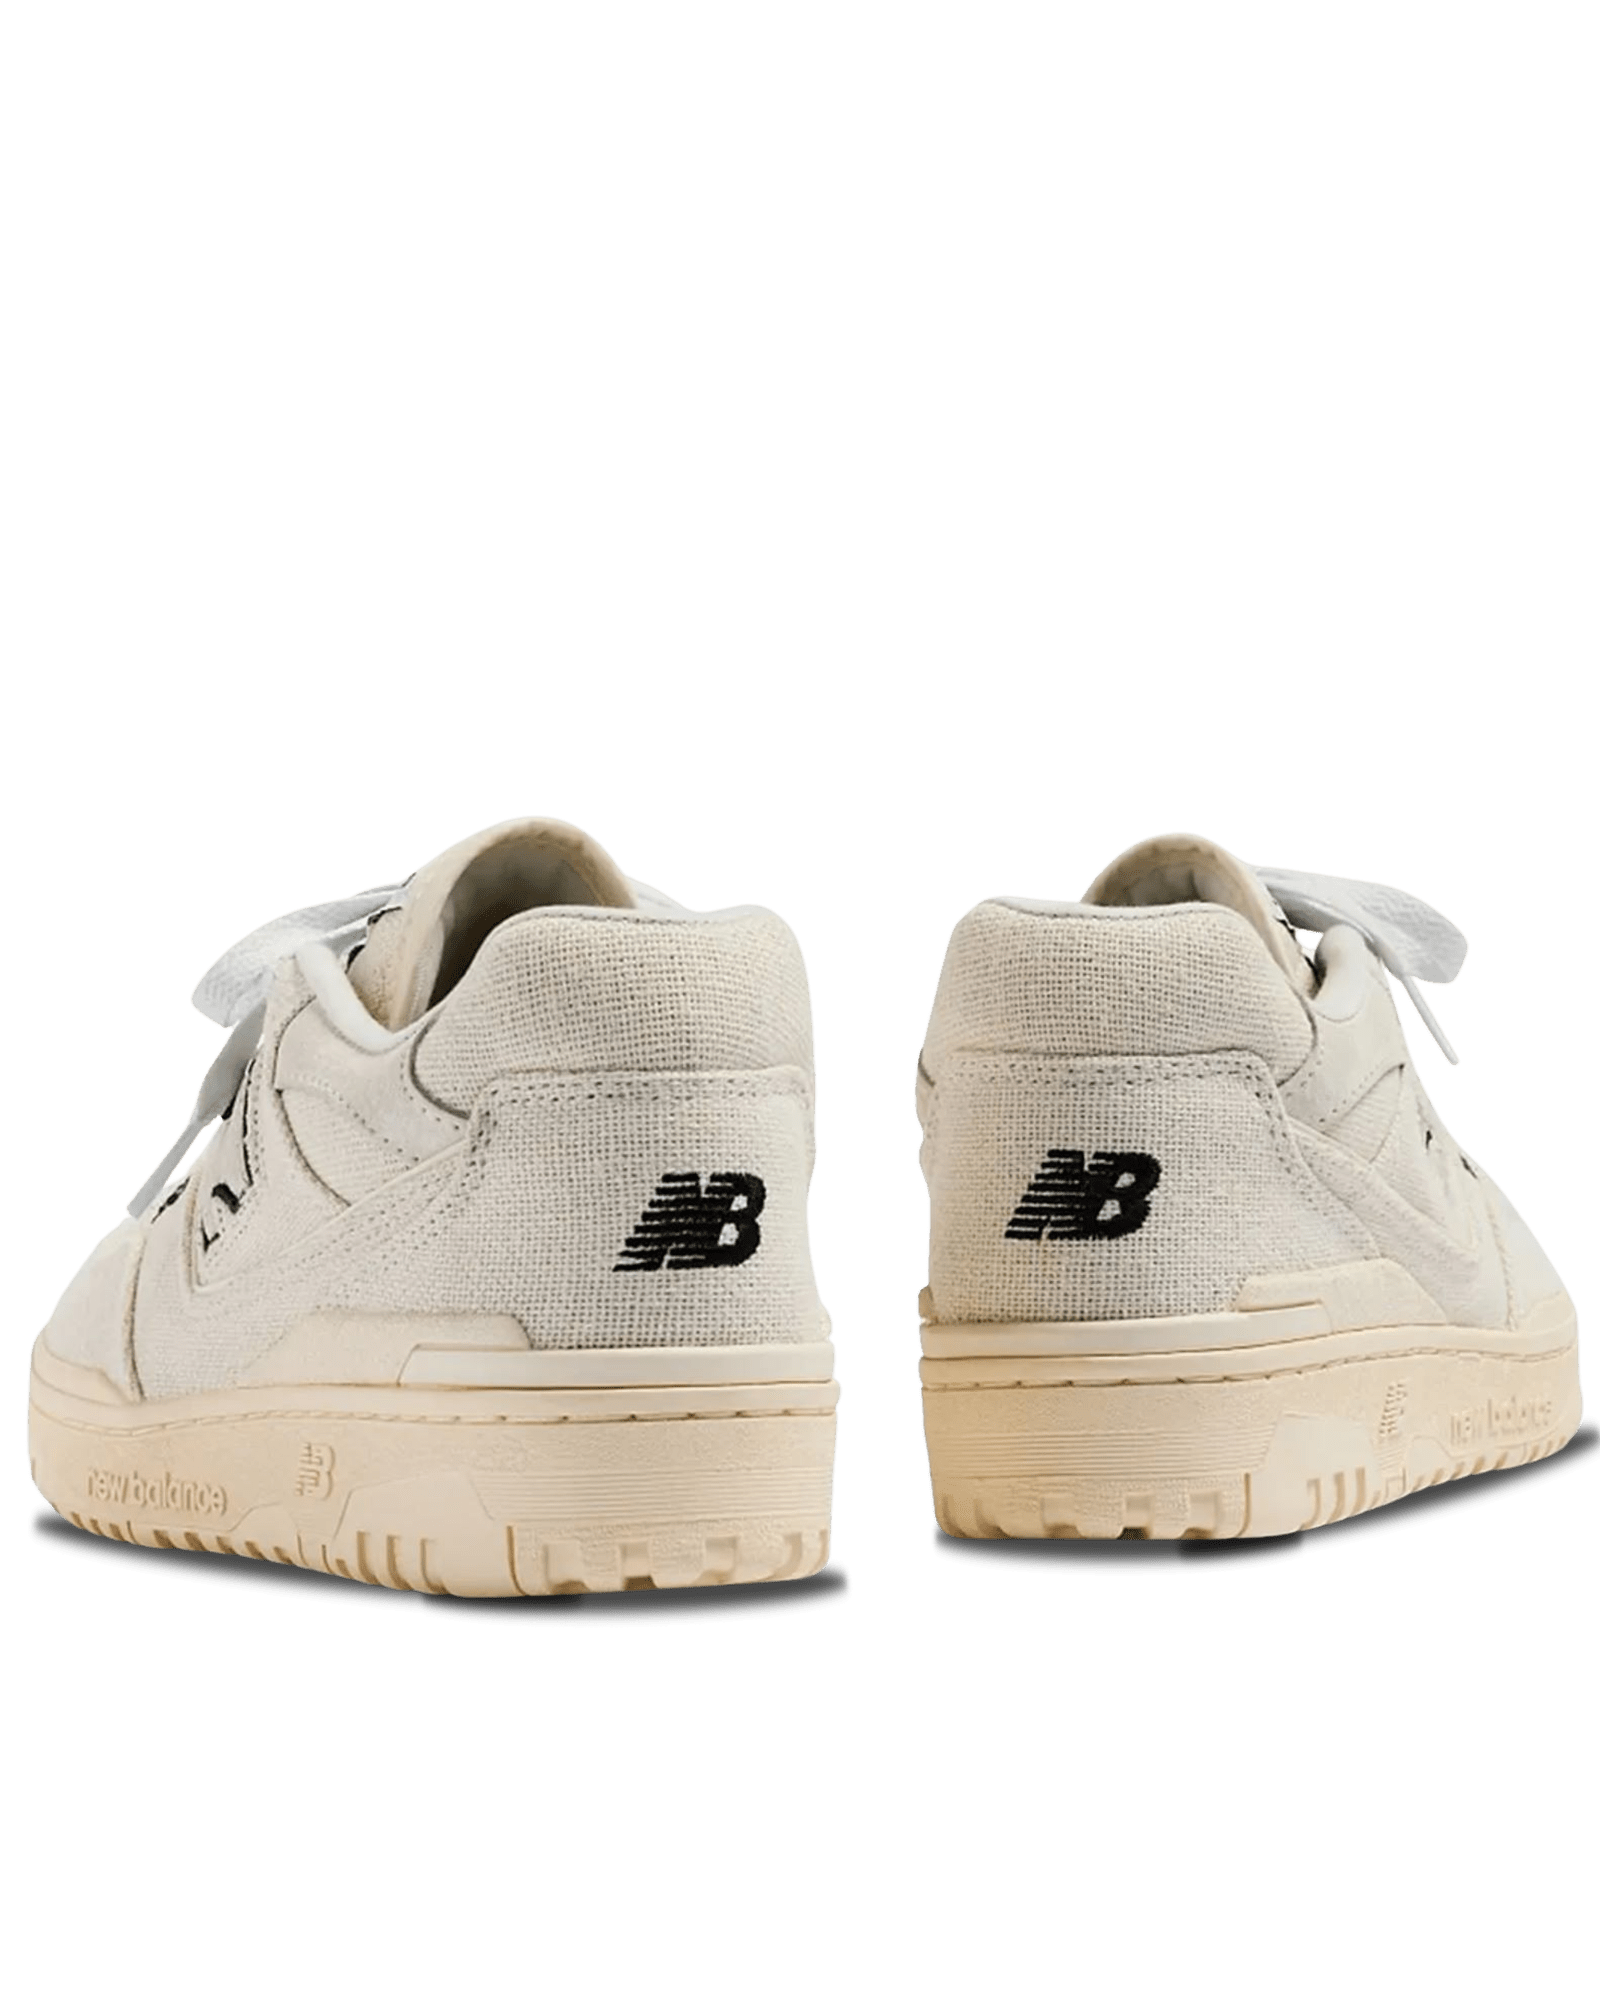 BB550MDA $124 New Balance Footwear Sneakers White